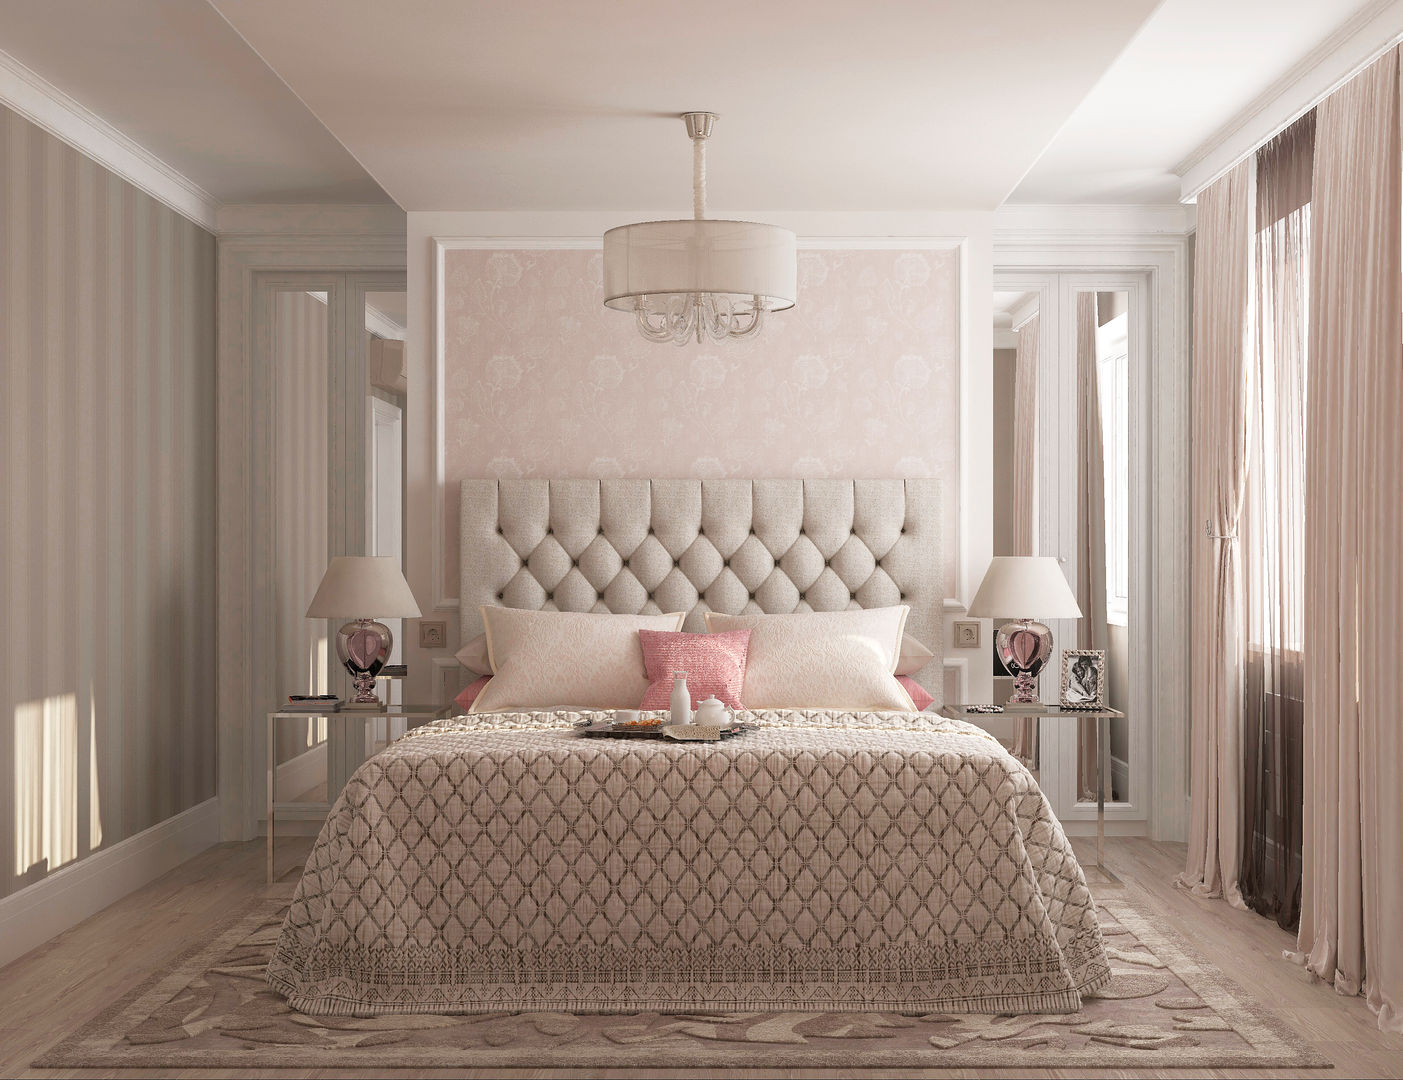 Спальня гостевая "Glamour", Студия дизайна Дарьи Одарюк Студия дизайна Дарьи Одарюк غرفة نوم